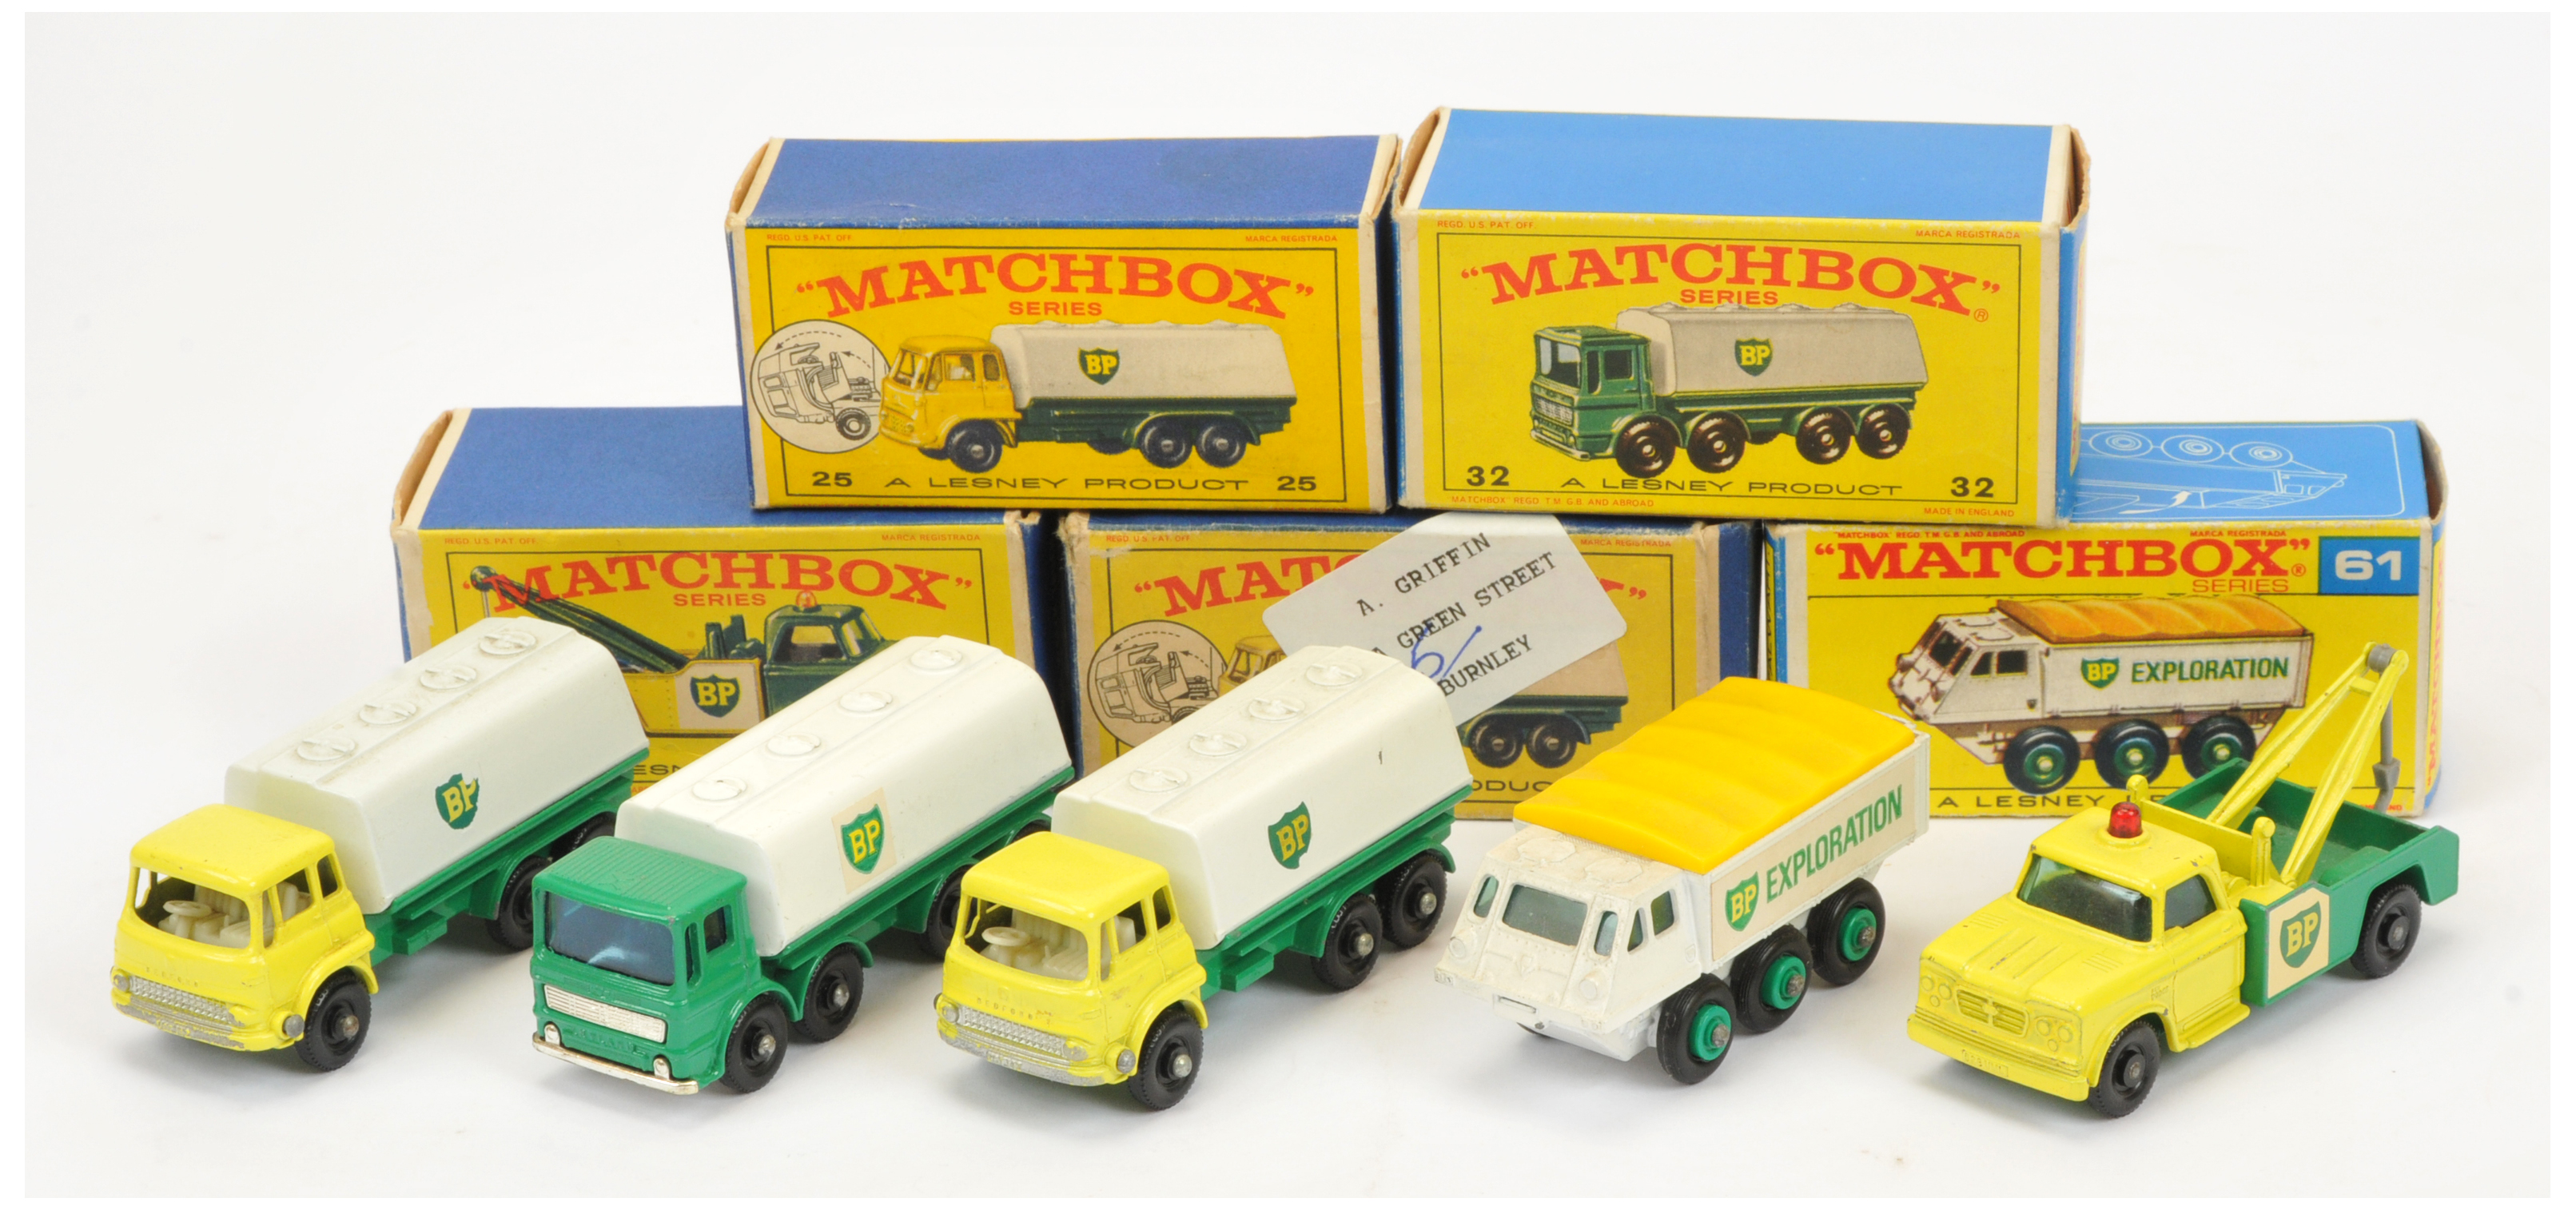 Matchbox Regular Wheels boxed group (1) 13d Dodge Wreck Truck - lemon yellow cab and jib, green b...